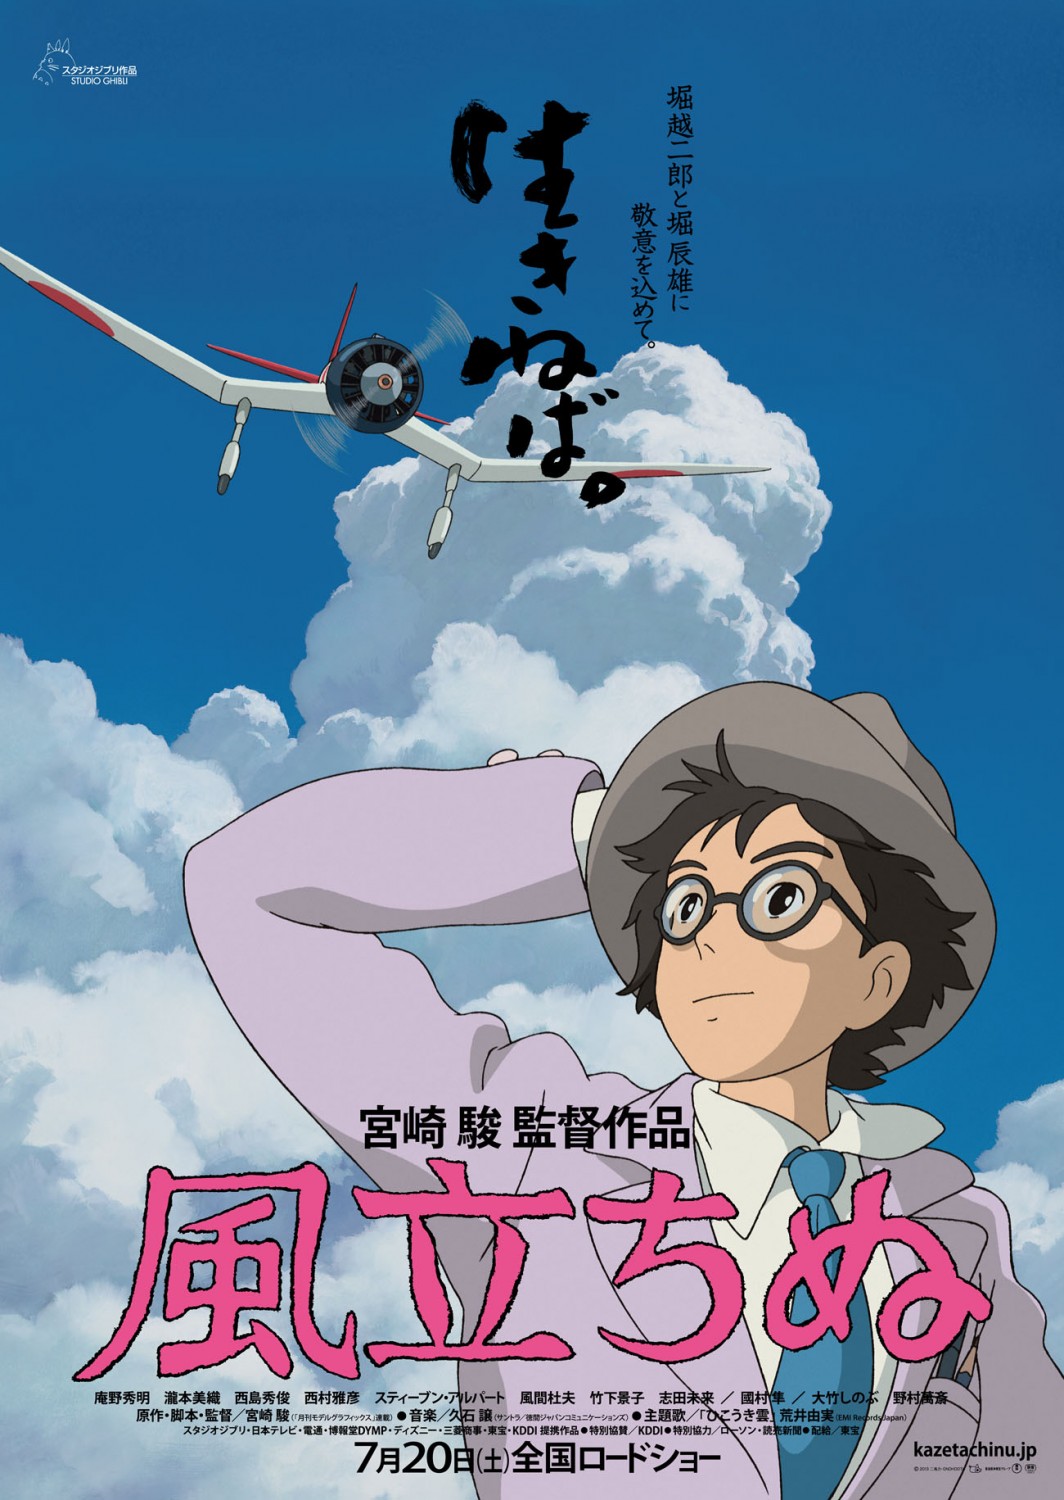 Extra Large Movie Poster Image for Kaze tachinu (#2 of 6)